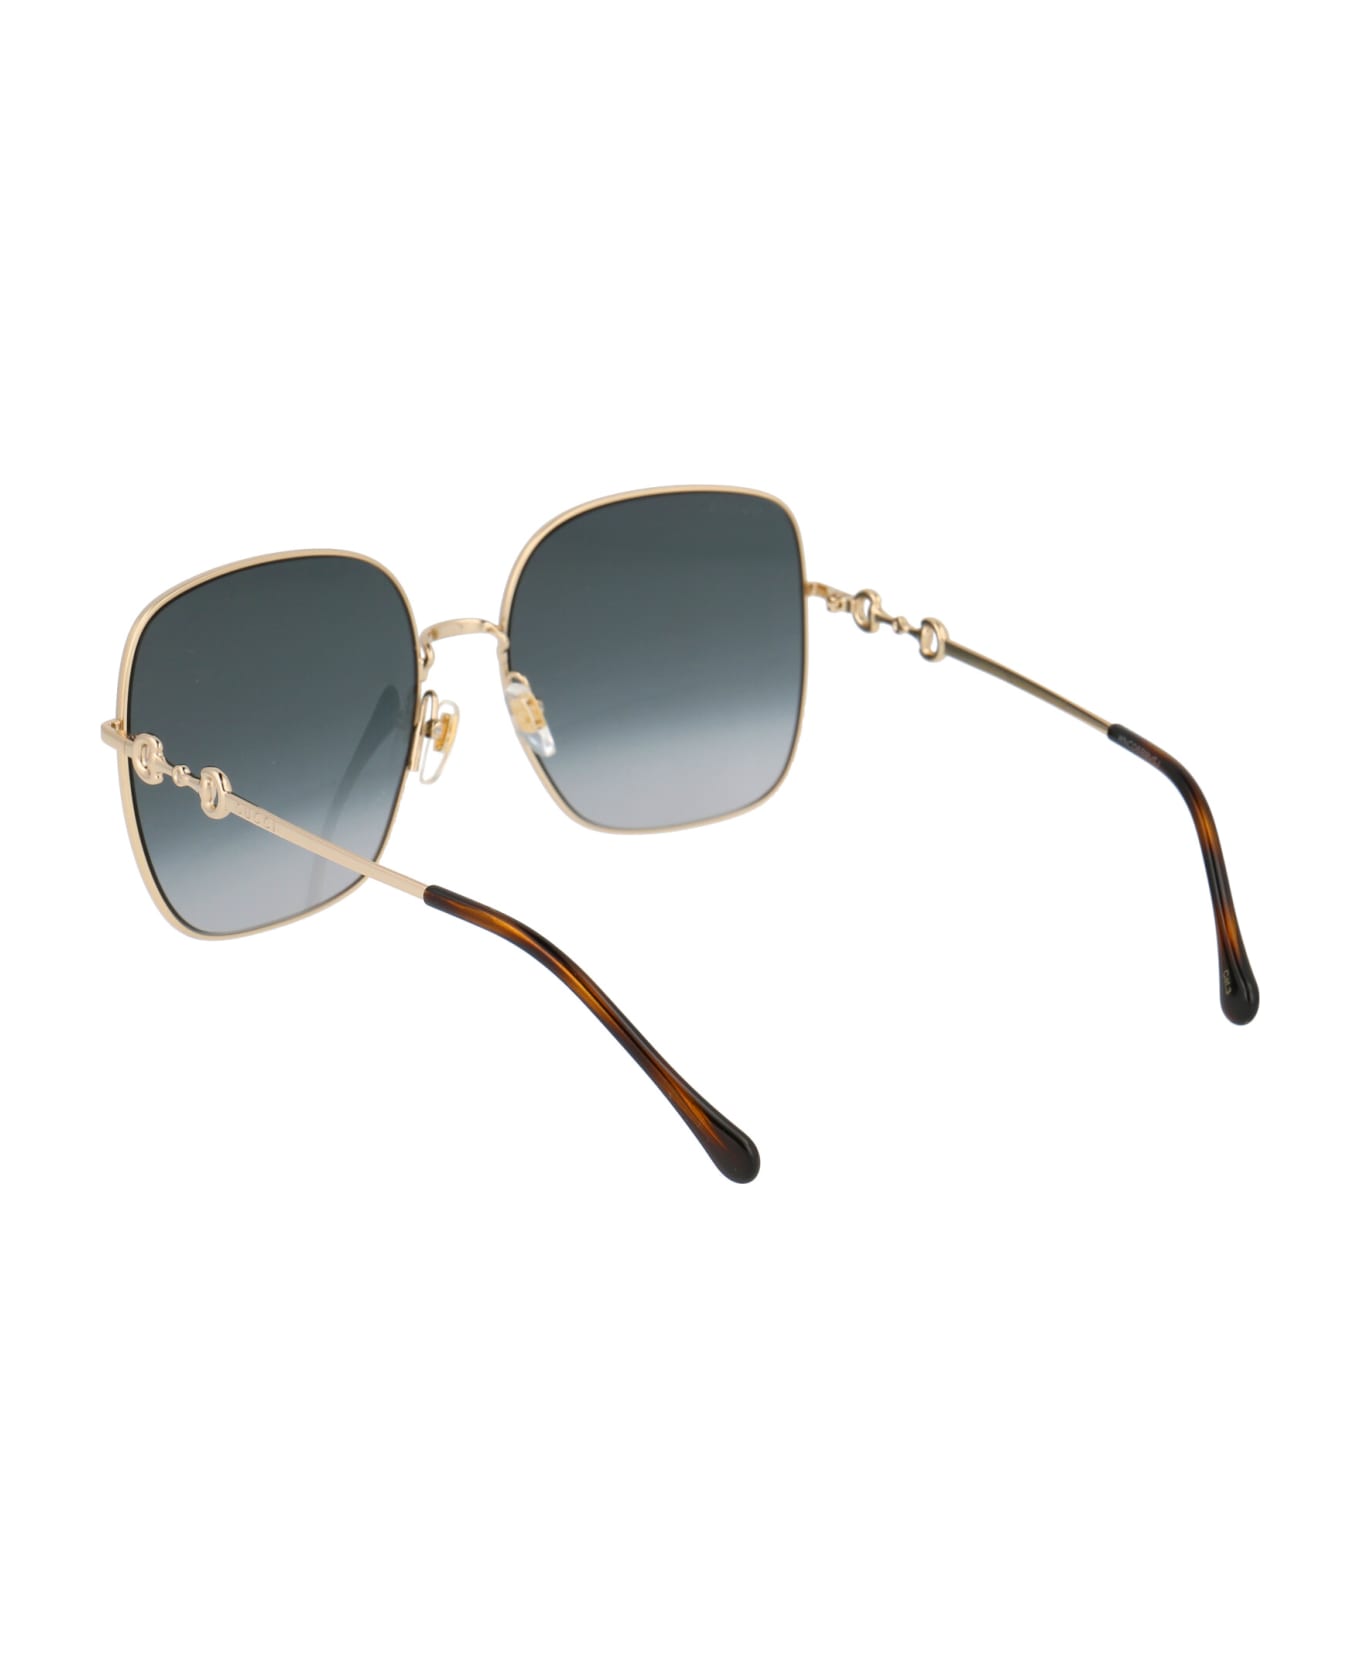 Gucci Eyewear Gg0879s Sunglasses - 001 GOLD GOLD GREY